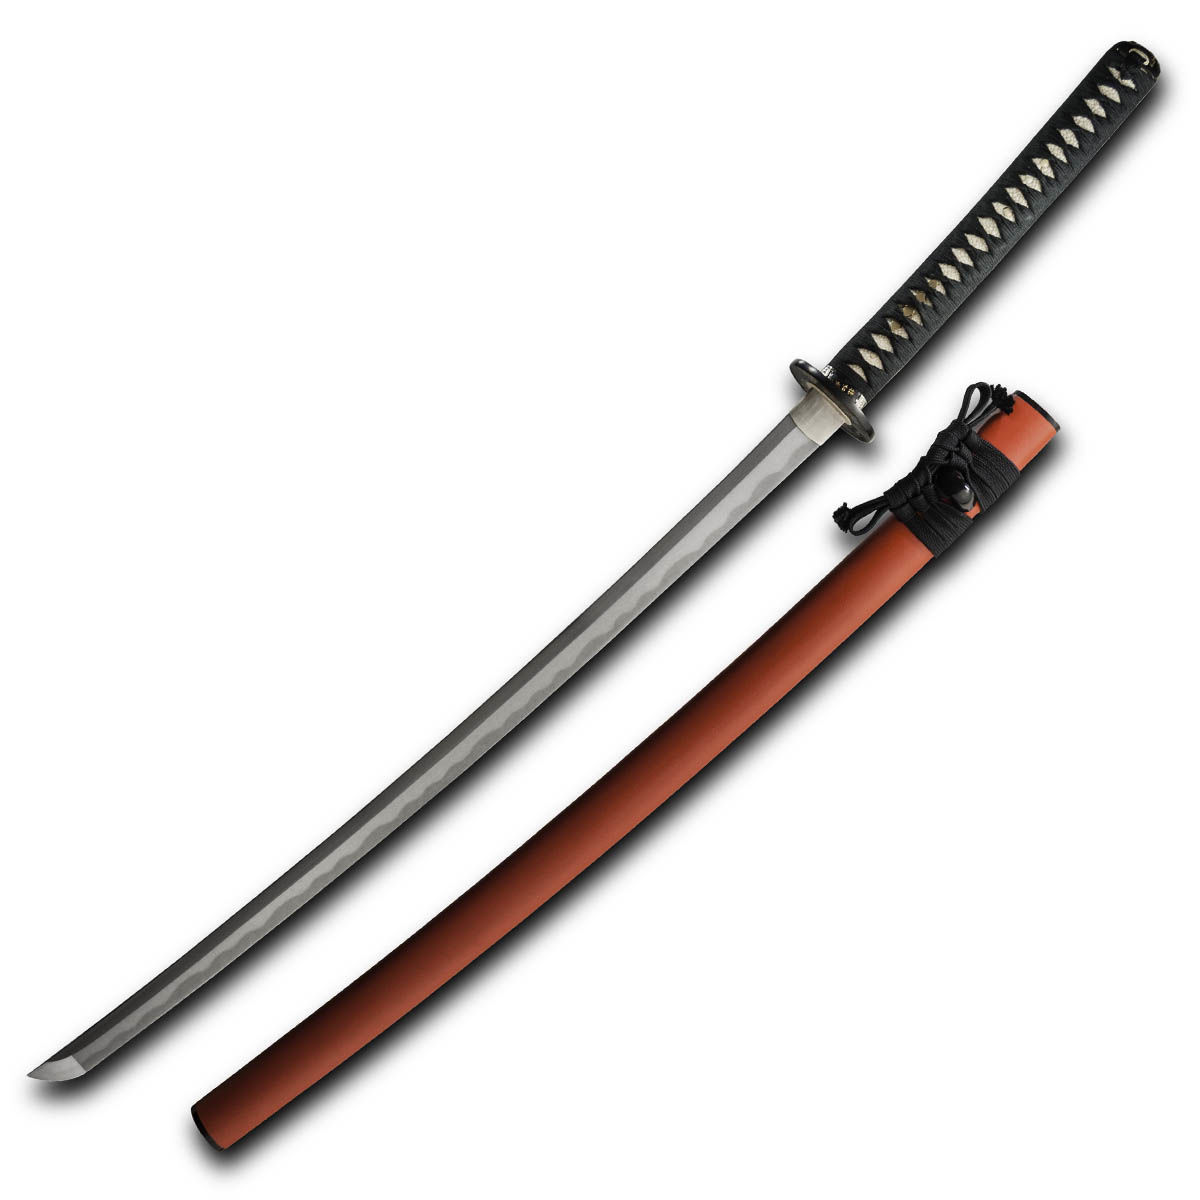 Takeda Shingen Katana from Paul Chen / Hanwei has 65 MN High Carbon Steel blade and textured red saya